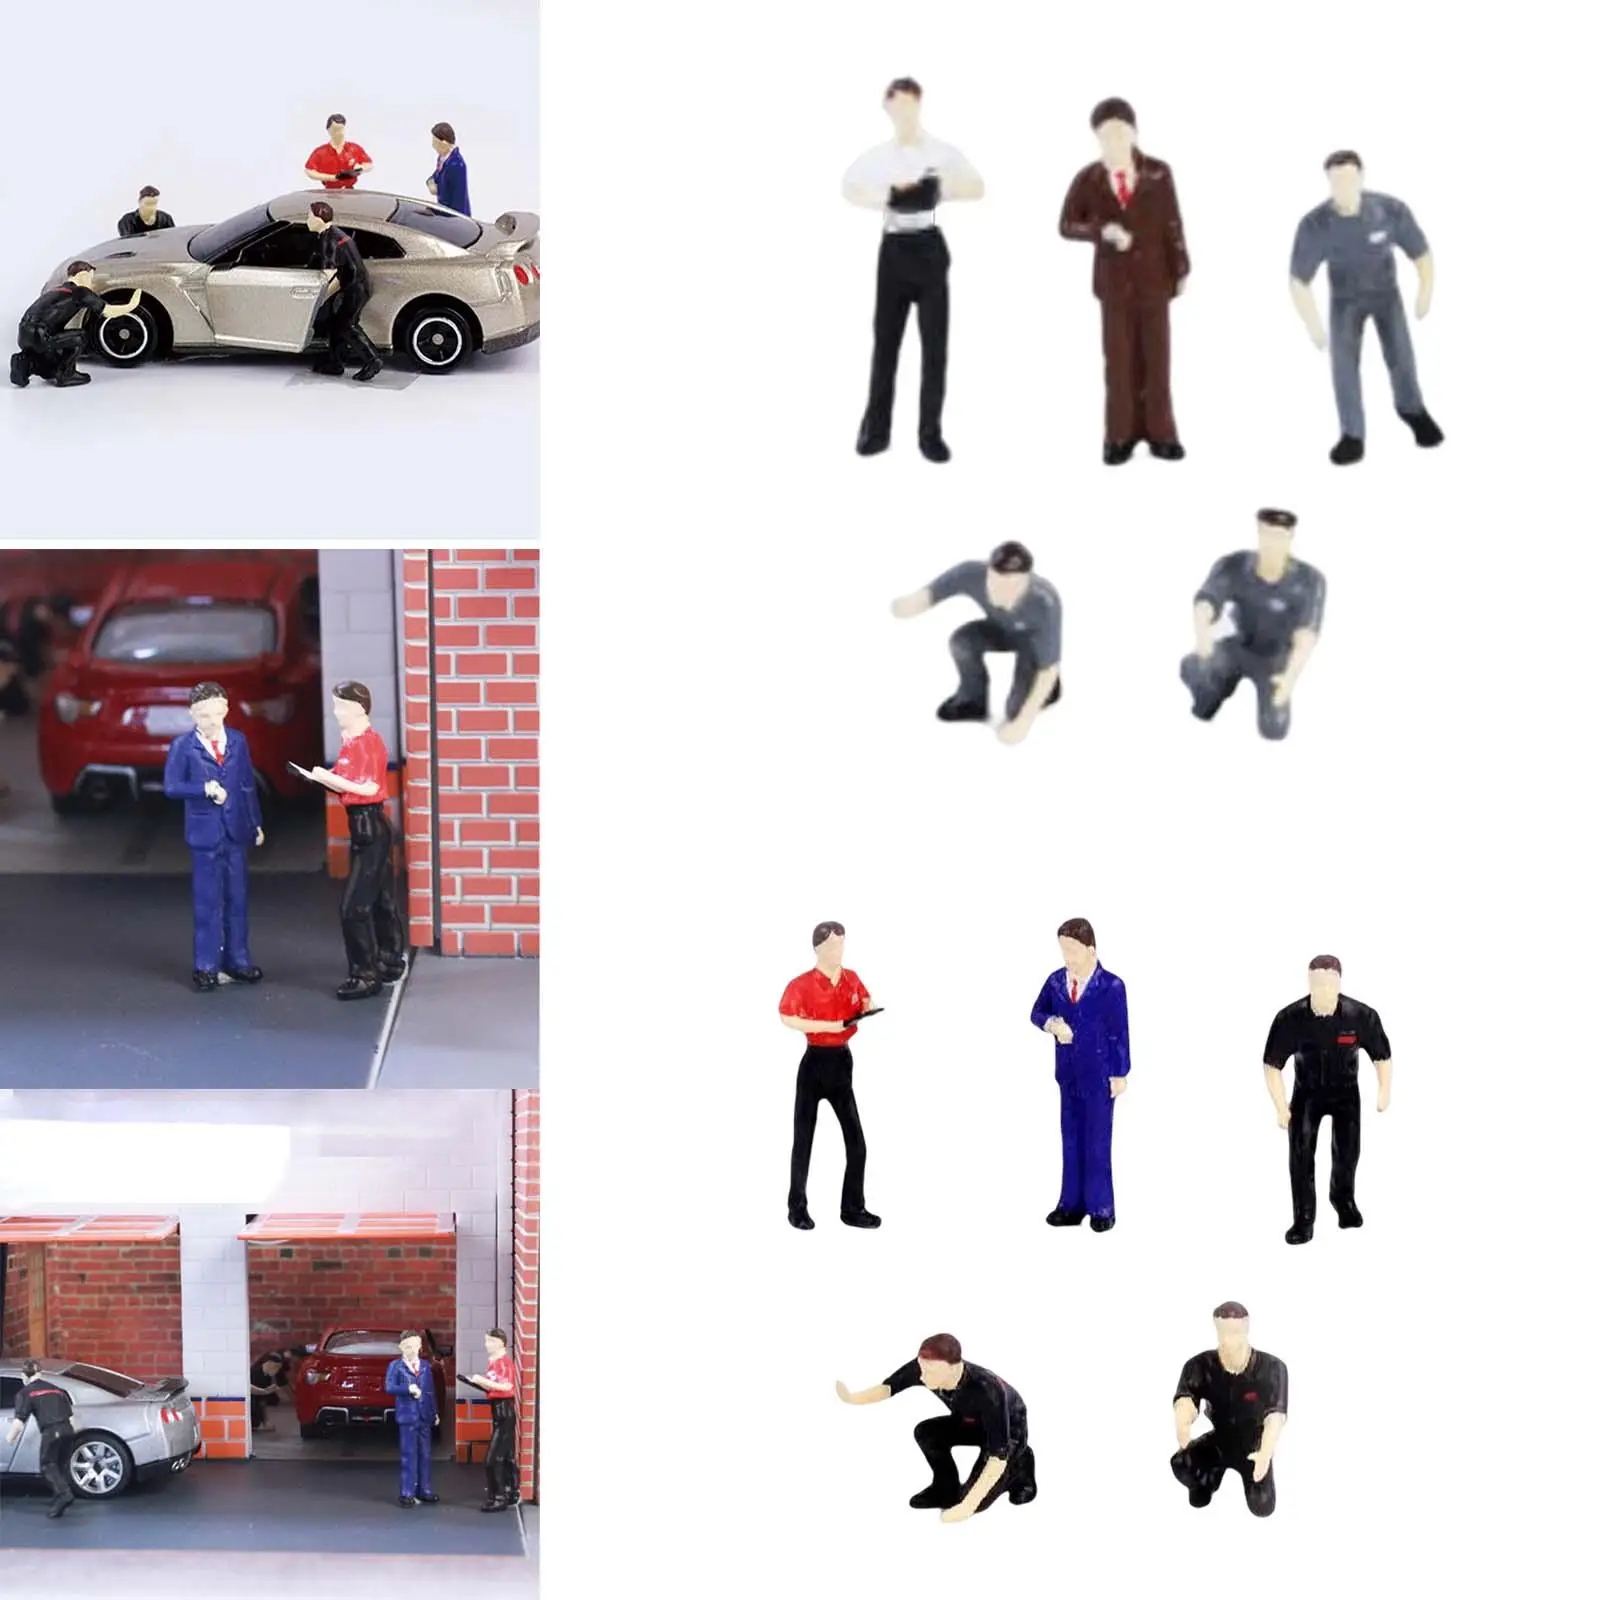 5 Pieces 1:64 Repairman Figure Miniature Scenes Diorama Scenery DIY Projects Micro Landscape Layout Train Railway S Scale Decor